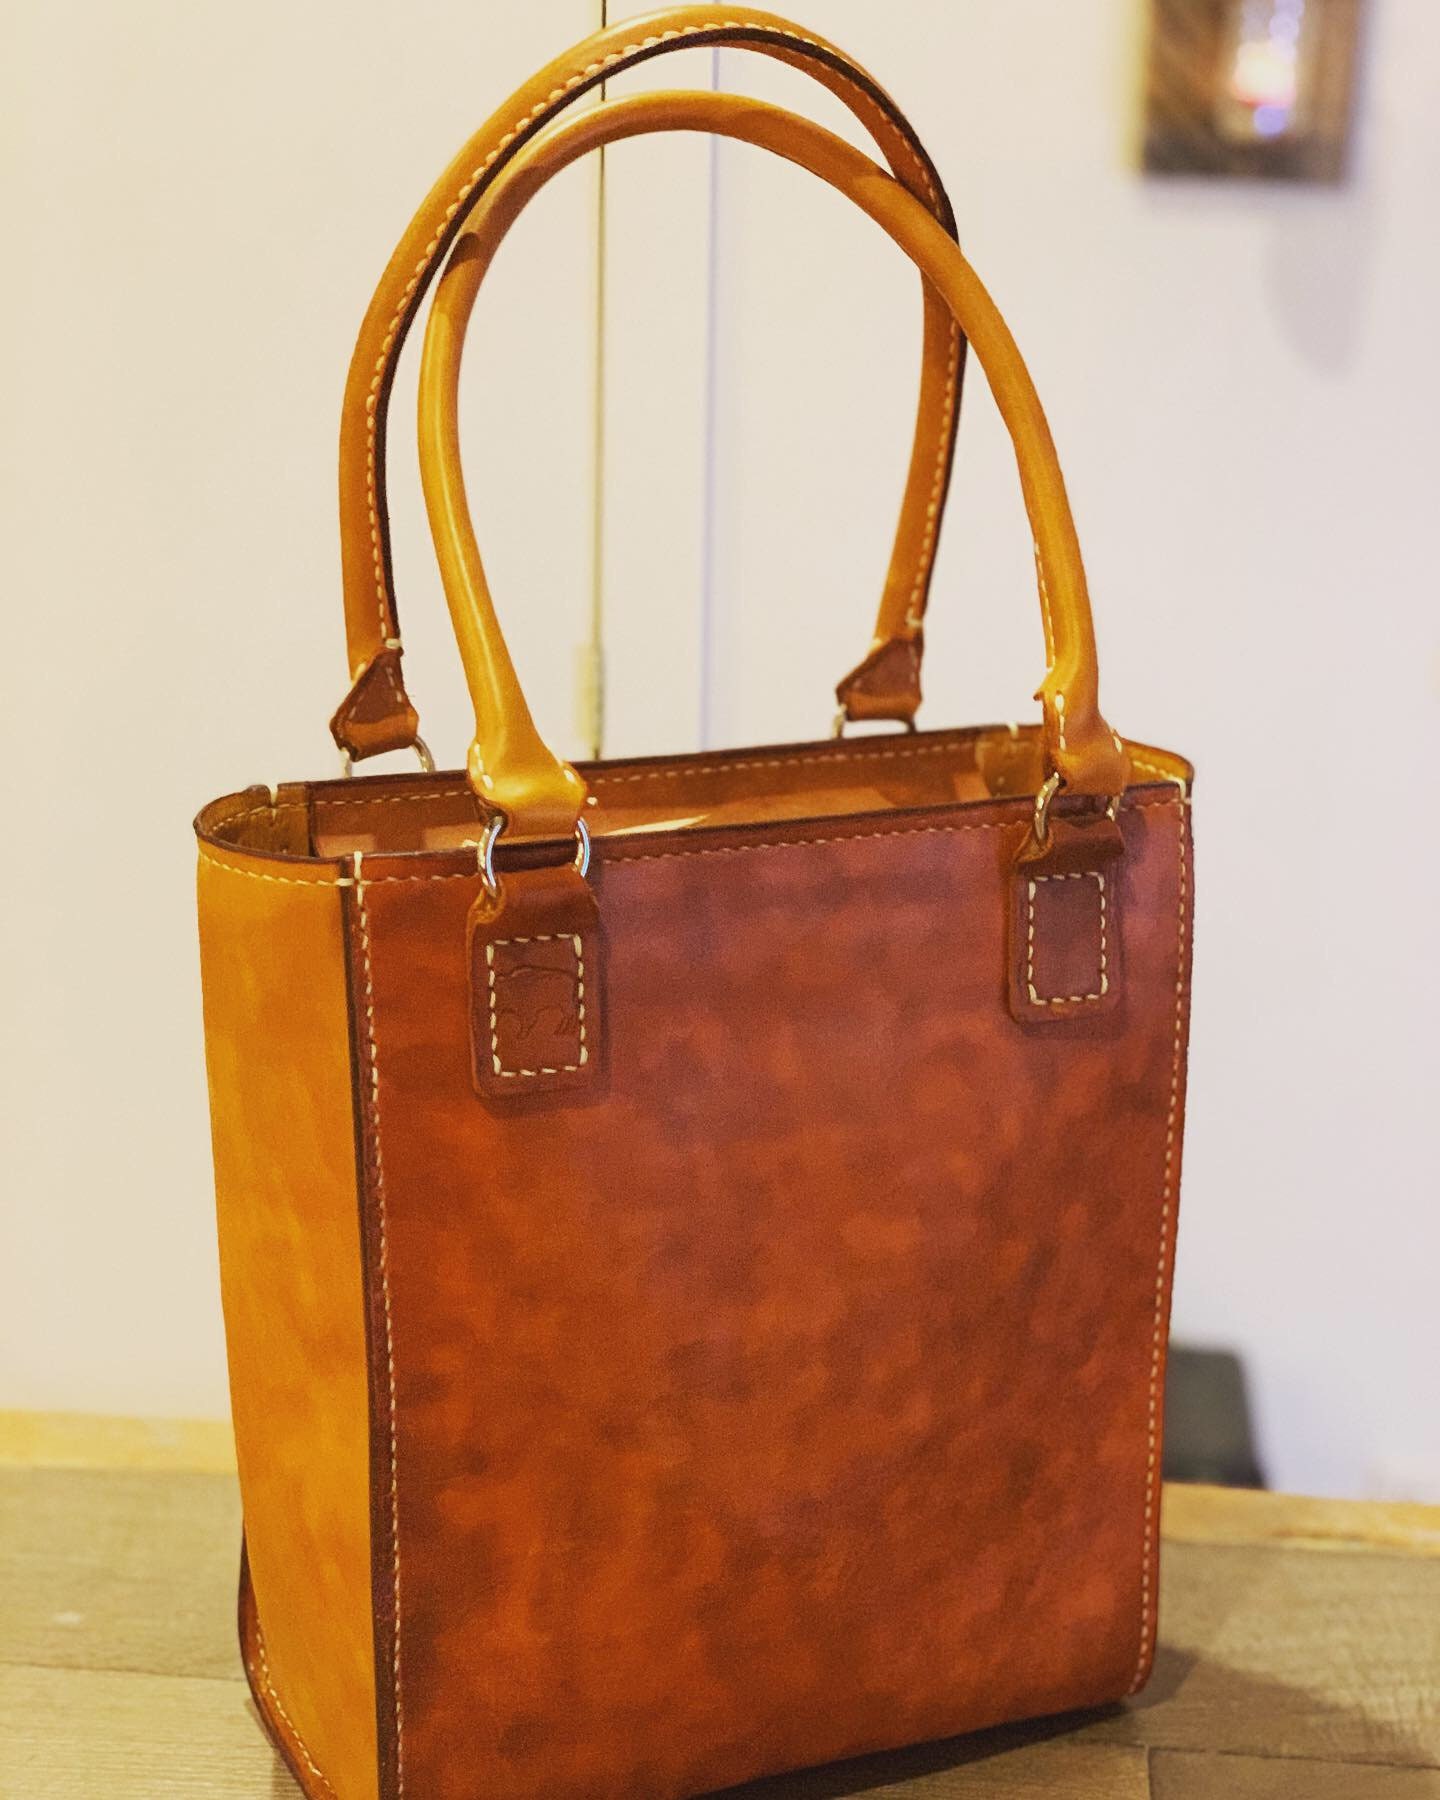 Elk Leather handbag | Etsy